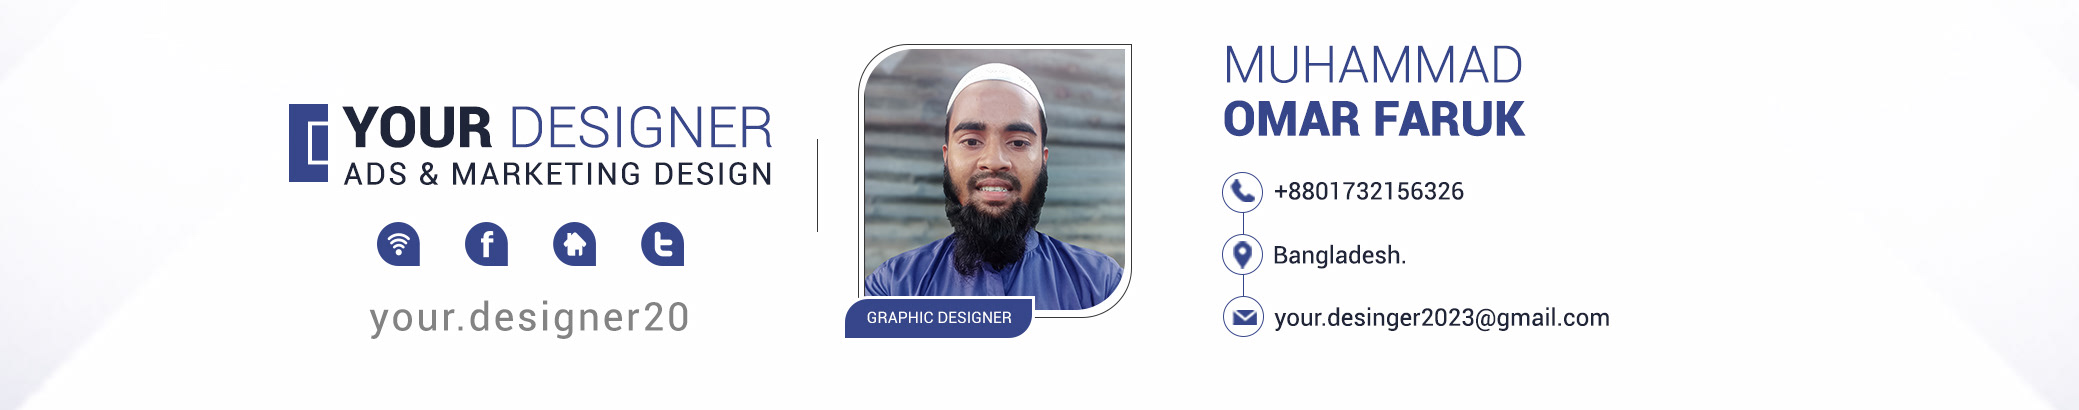 Profielbanner van Muhammd Omar Faruk